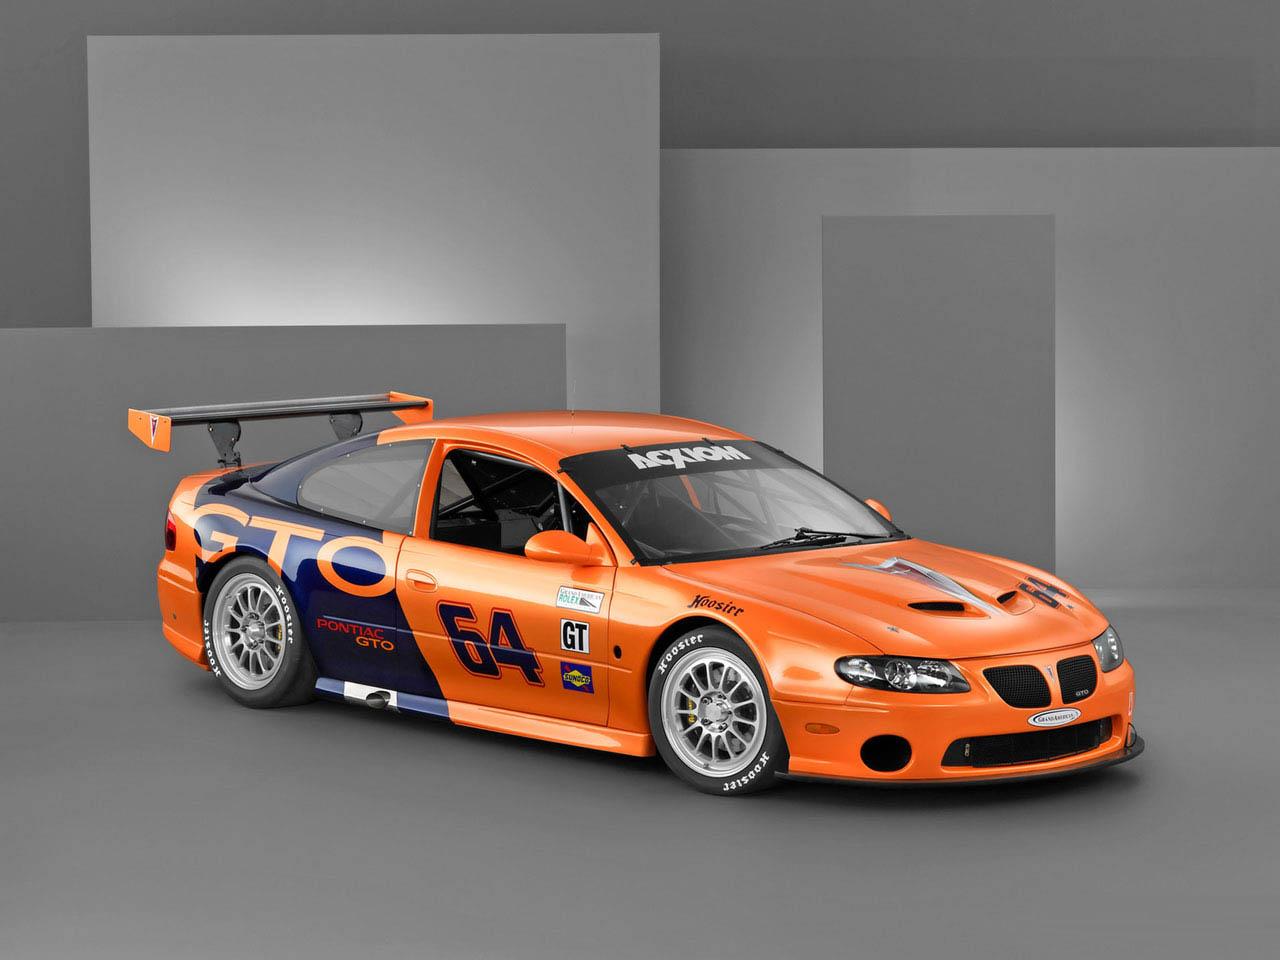 Wallpaper To Image: Orange Racing Car Wallpaper